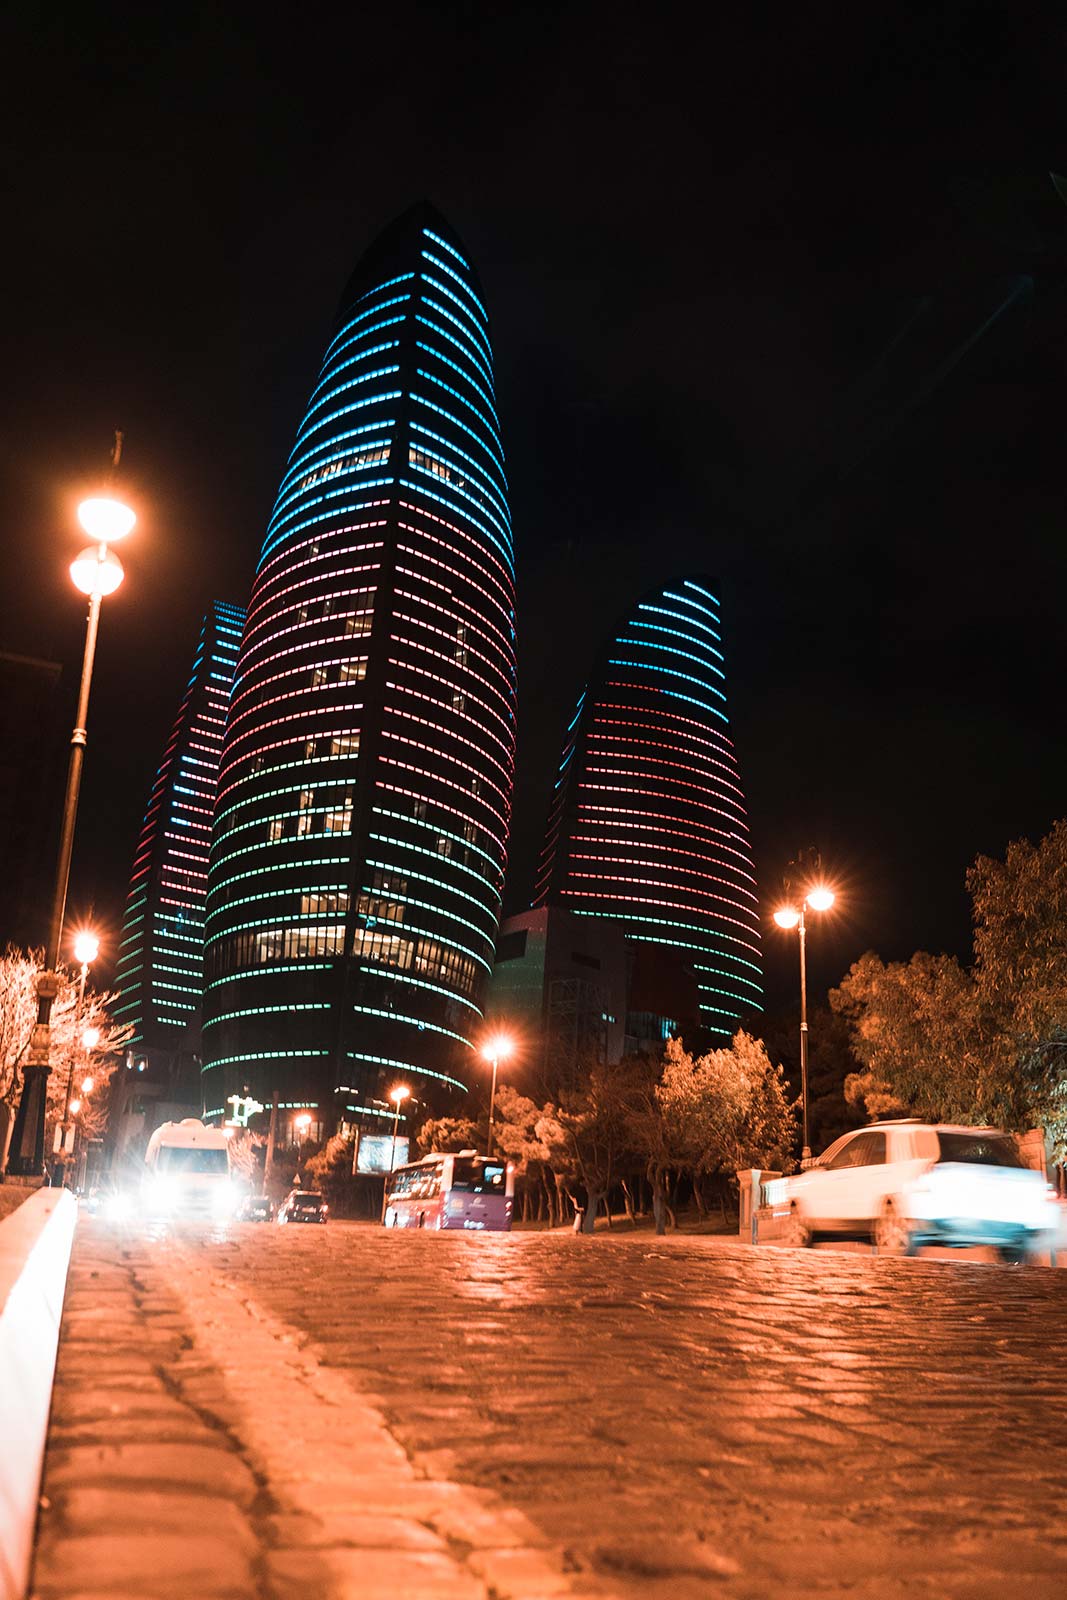 Flame Towers Building at night in Baku, Azerbaijan. Arriving in Baku